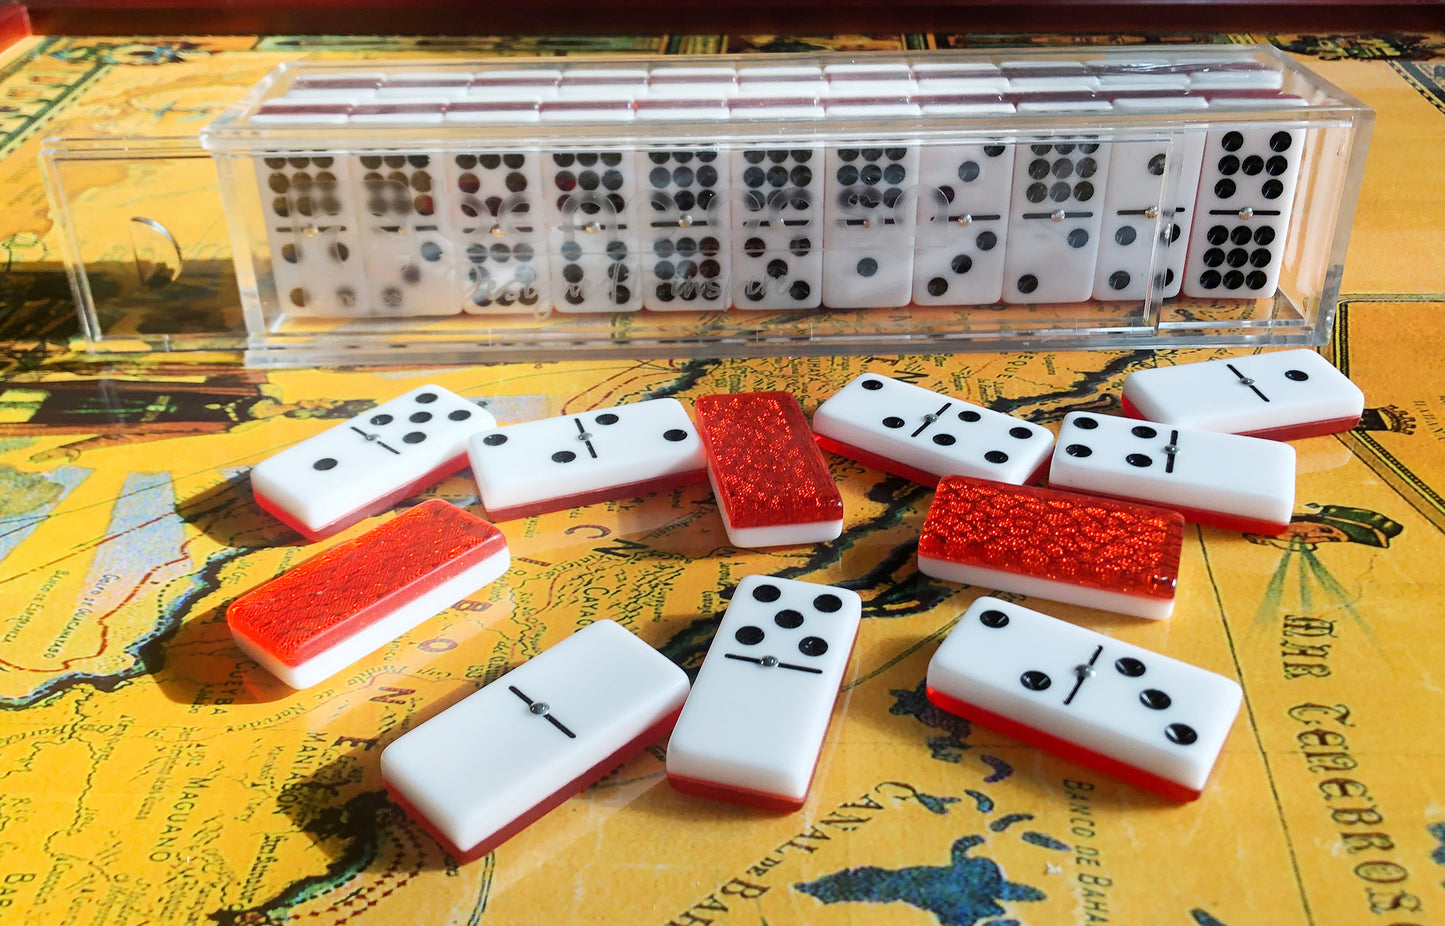 
                  
                    Bene Casa Professional Double Nine Dominoes in Acrylic Storage Box
                  
                